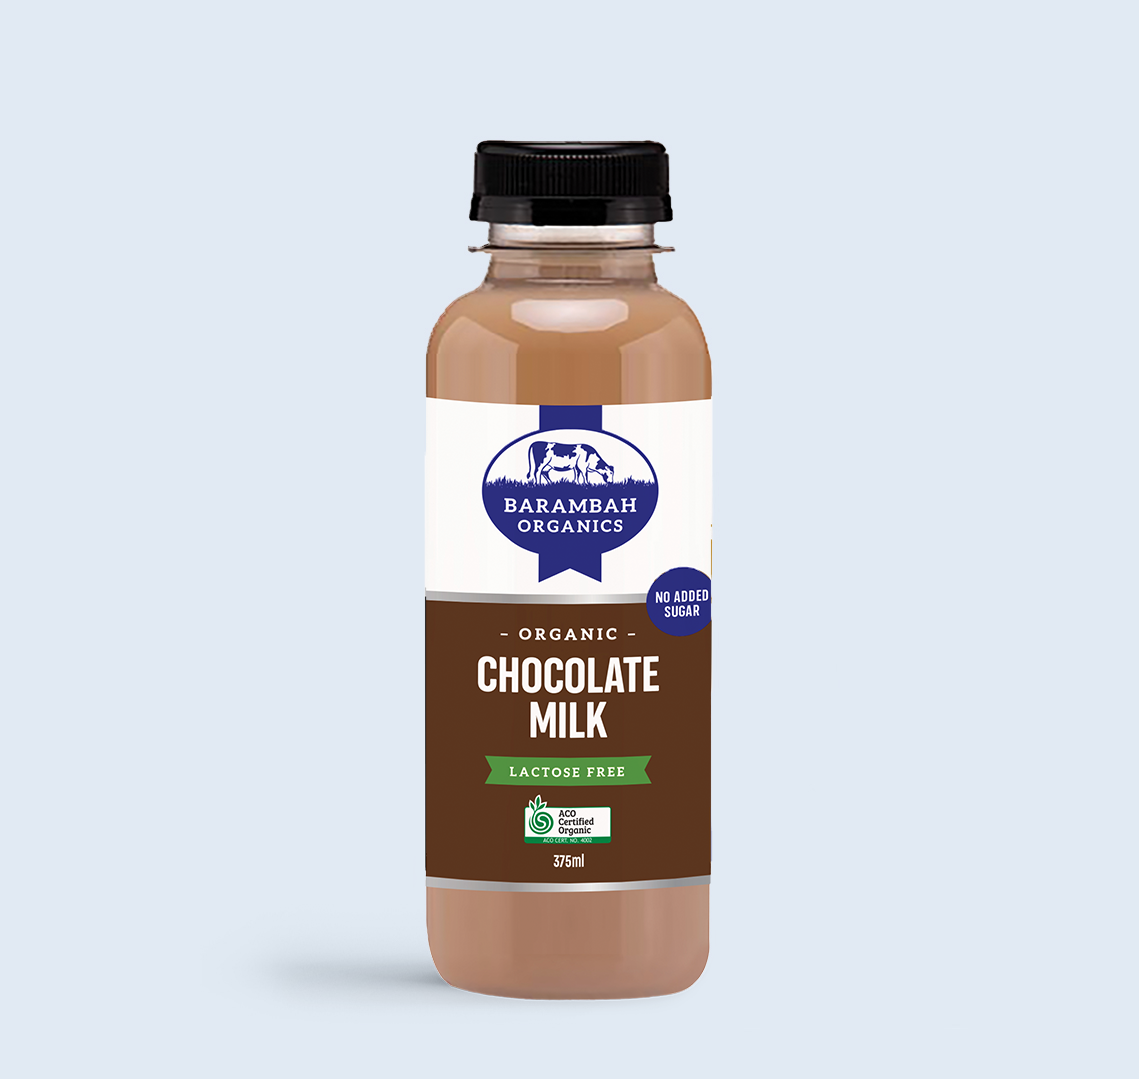 375ml of Chocolate Milk - Organic Milk Australia - Barambah Organics